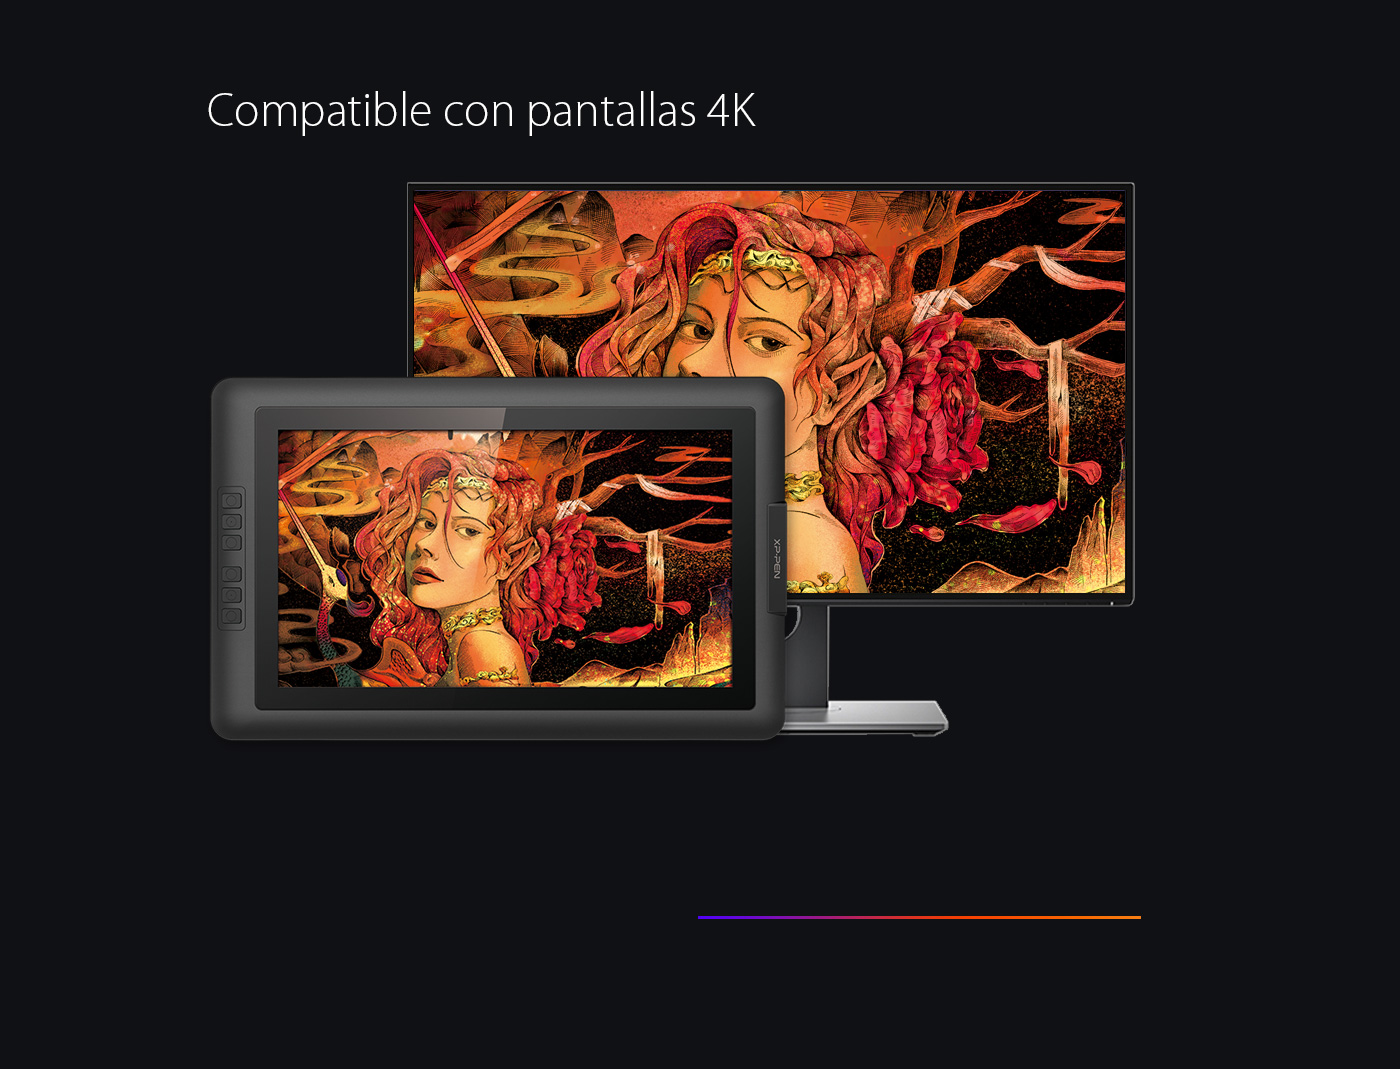 El controlador de XP-Pen Artist 15.6 soporte la pantalla 4k